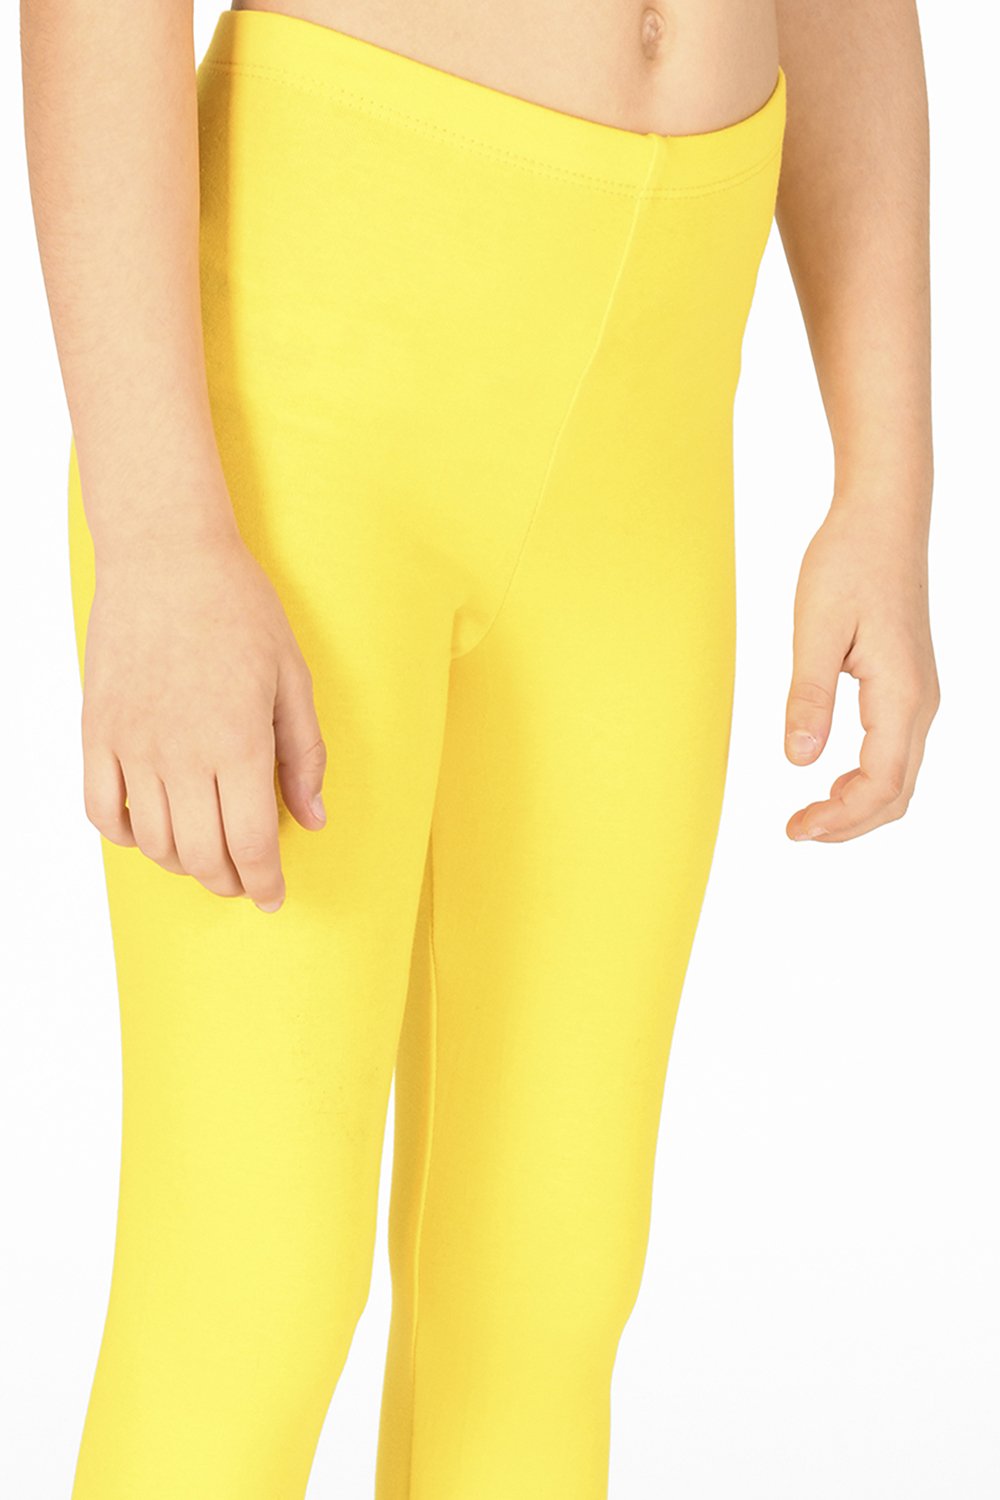 Buttercup Yellow Classic Full Length Childrens Leggings | LOVALL